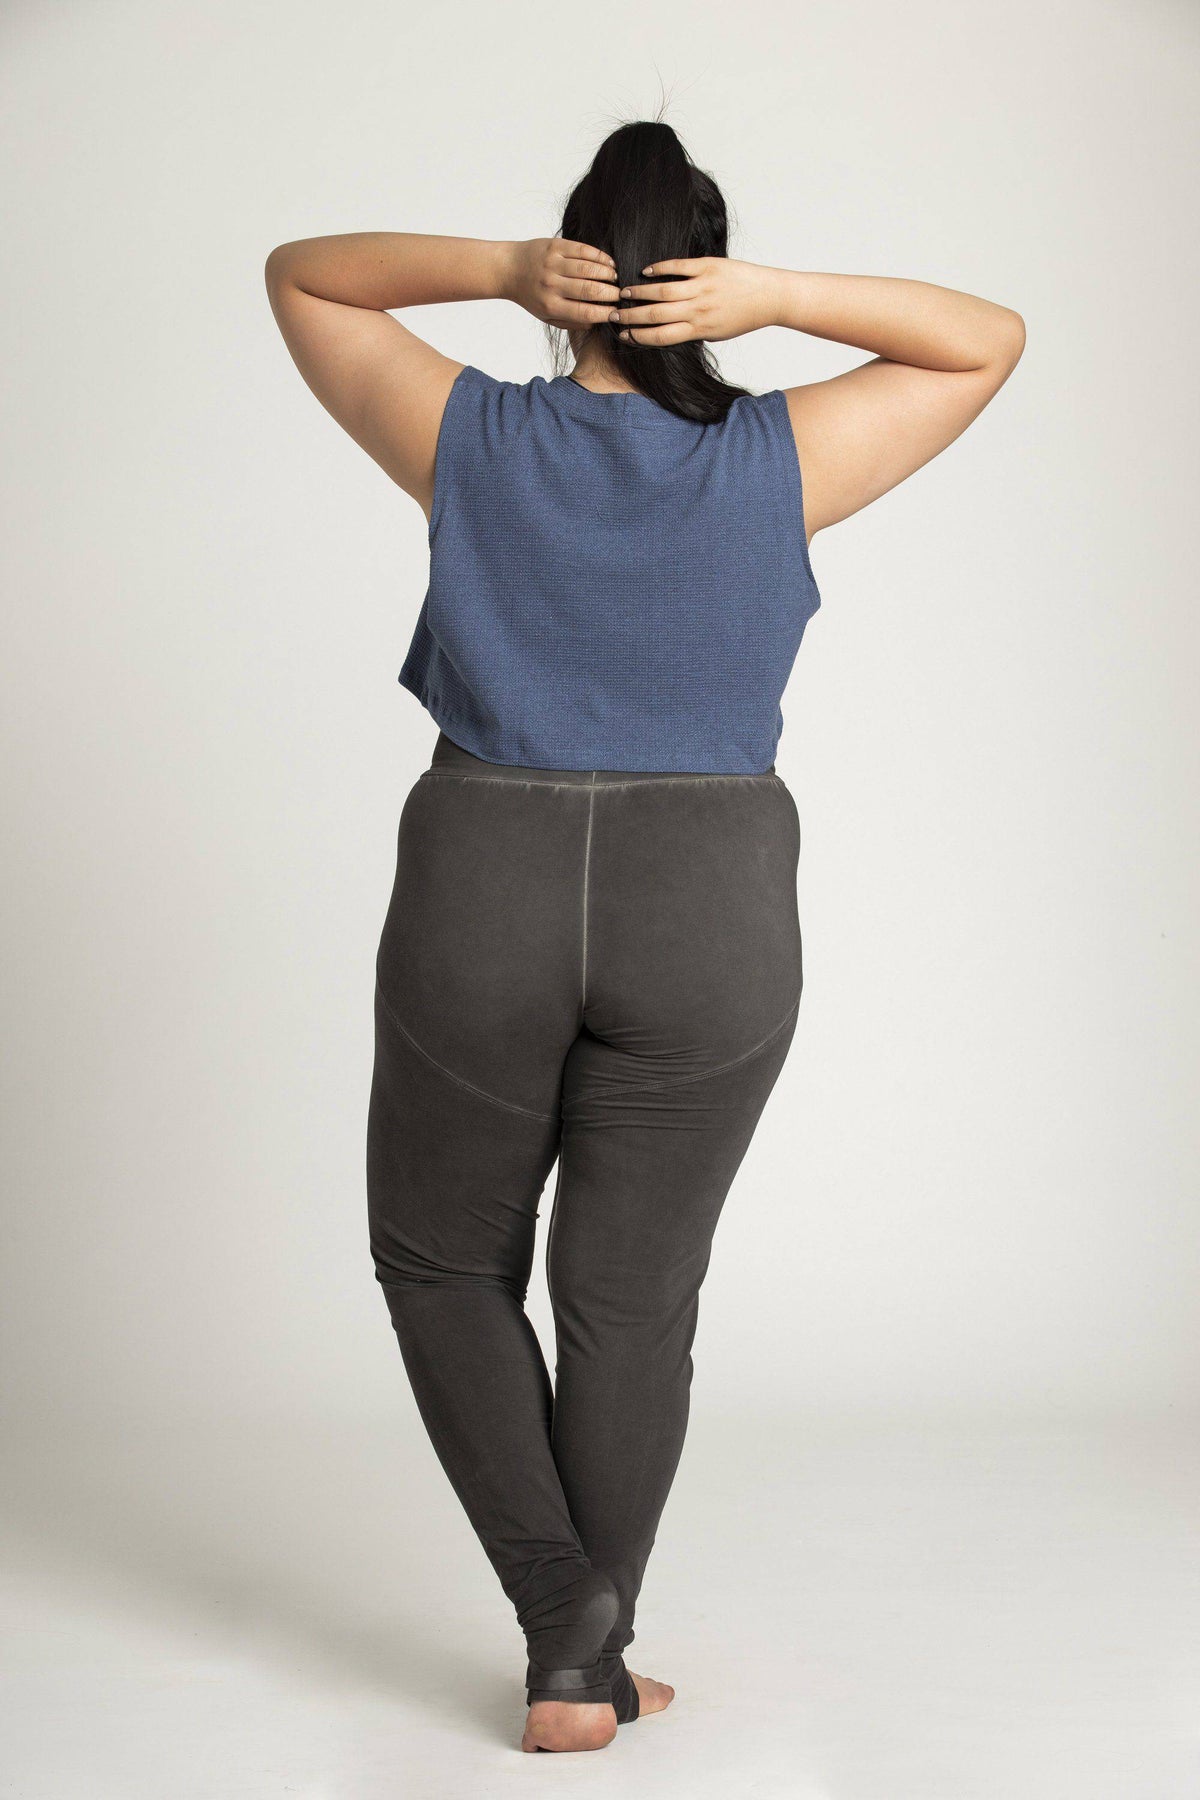 Stone Wash Extra Long Slouchy Pants - womens clothing - Ripple Yoga Wear